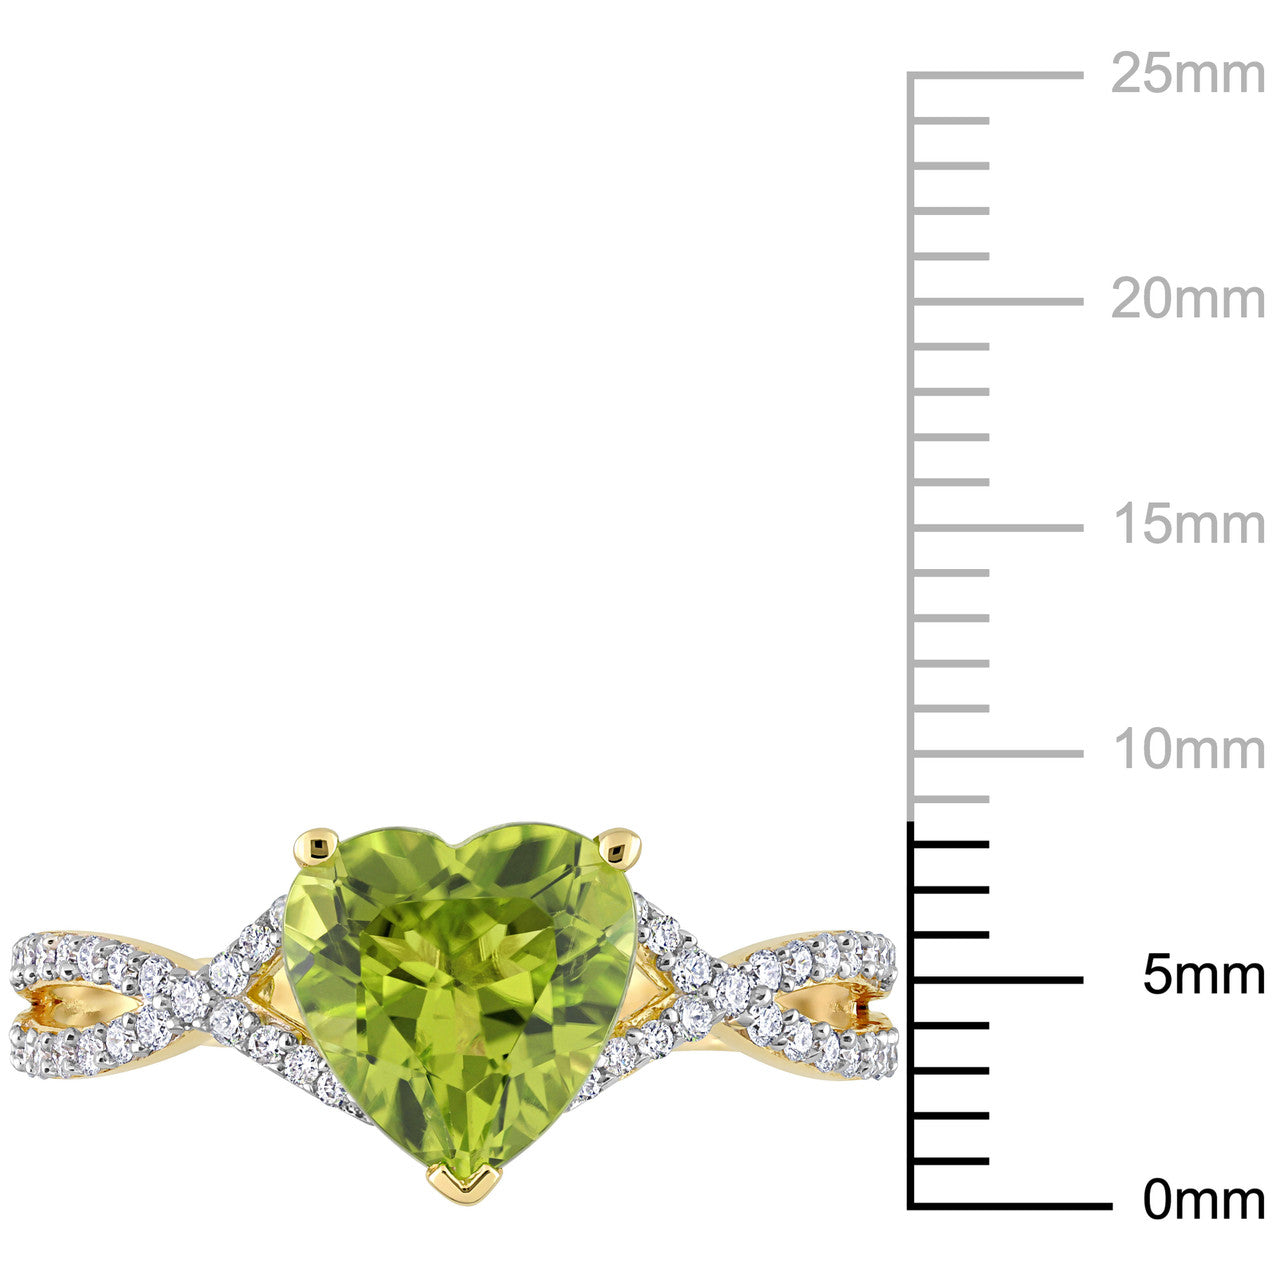 Ice Jewellery 1/5 CT Diamond And 1.67 CT Peridot Crossover Engagement Ring in 14k Yellow Gold - 75000005669 | Ice Jewellery Australia